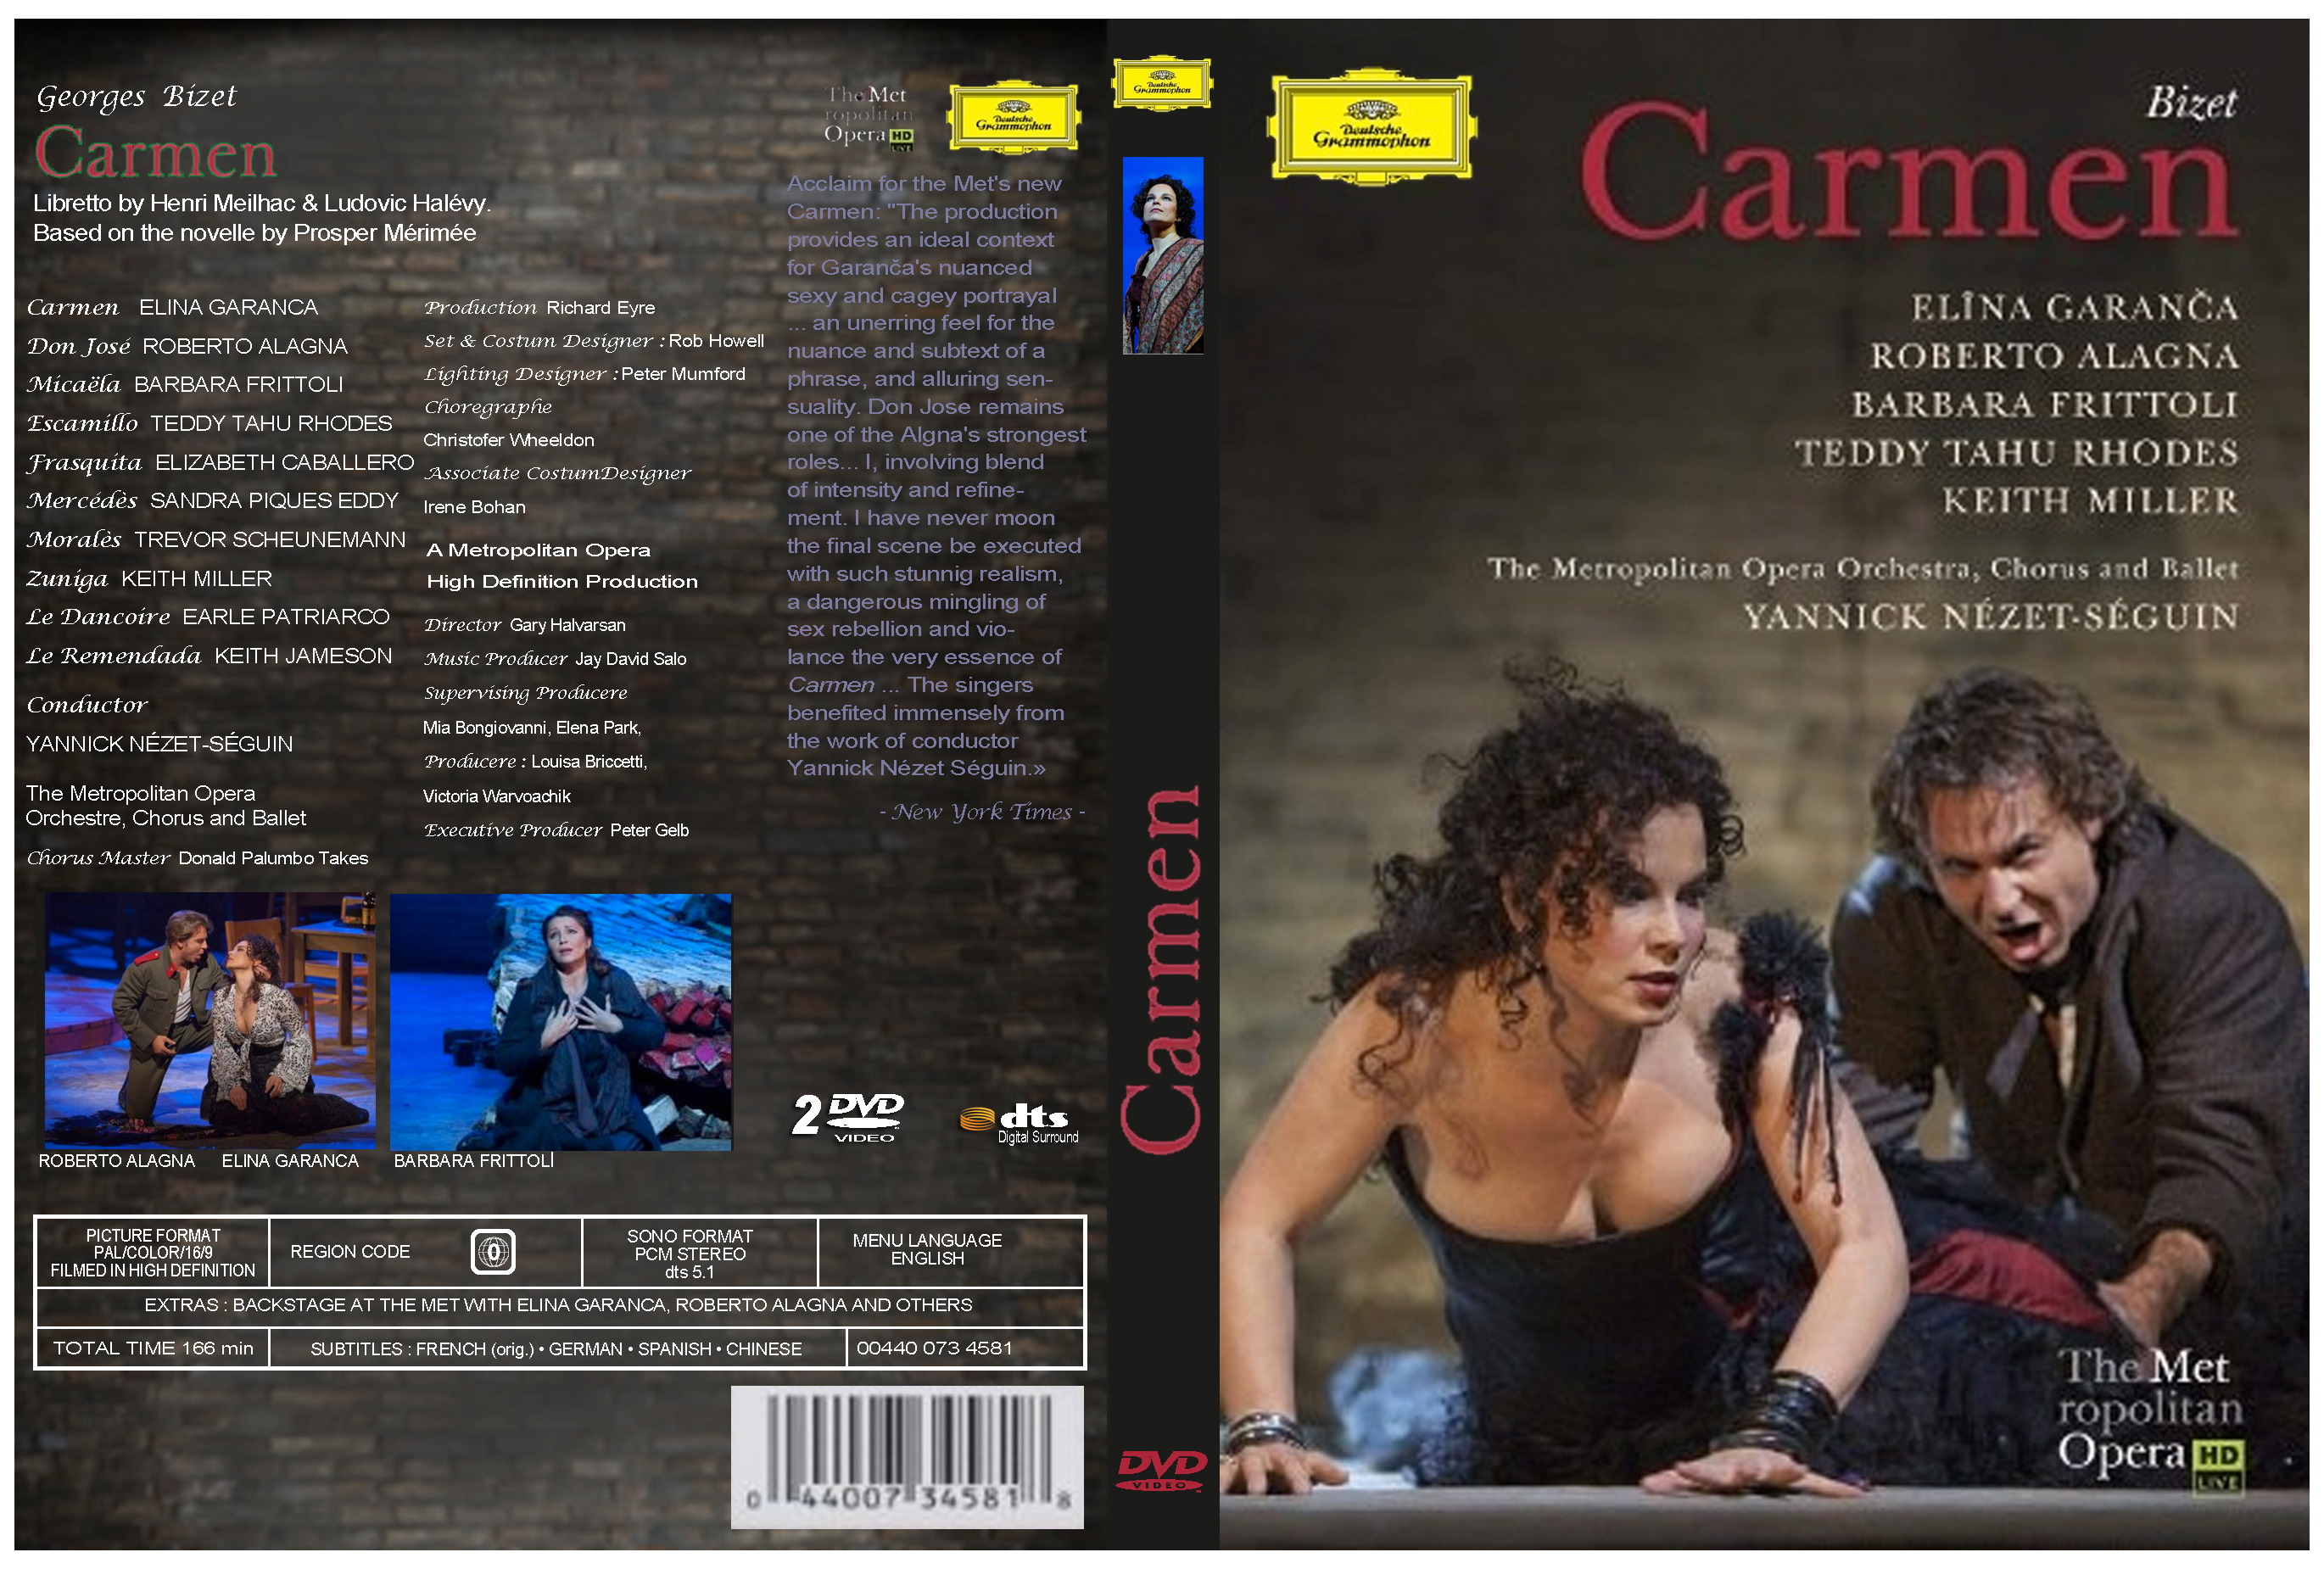 Jaquette DVD Carmen custom